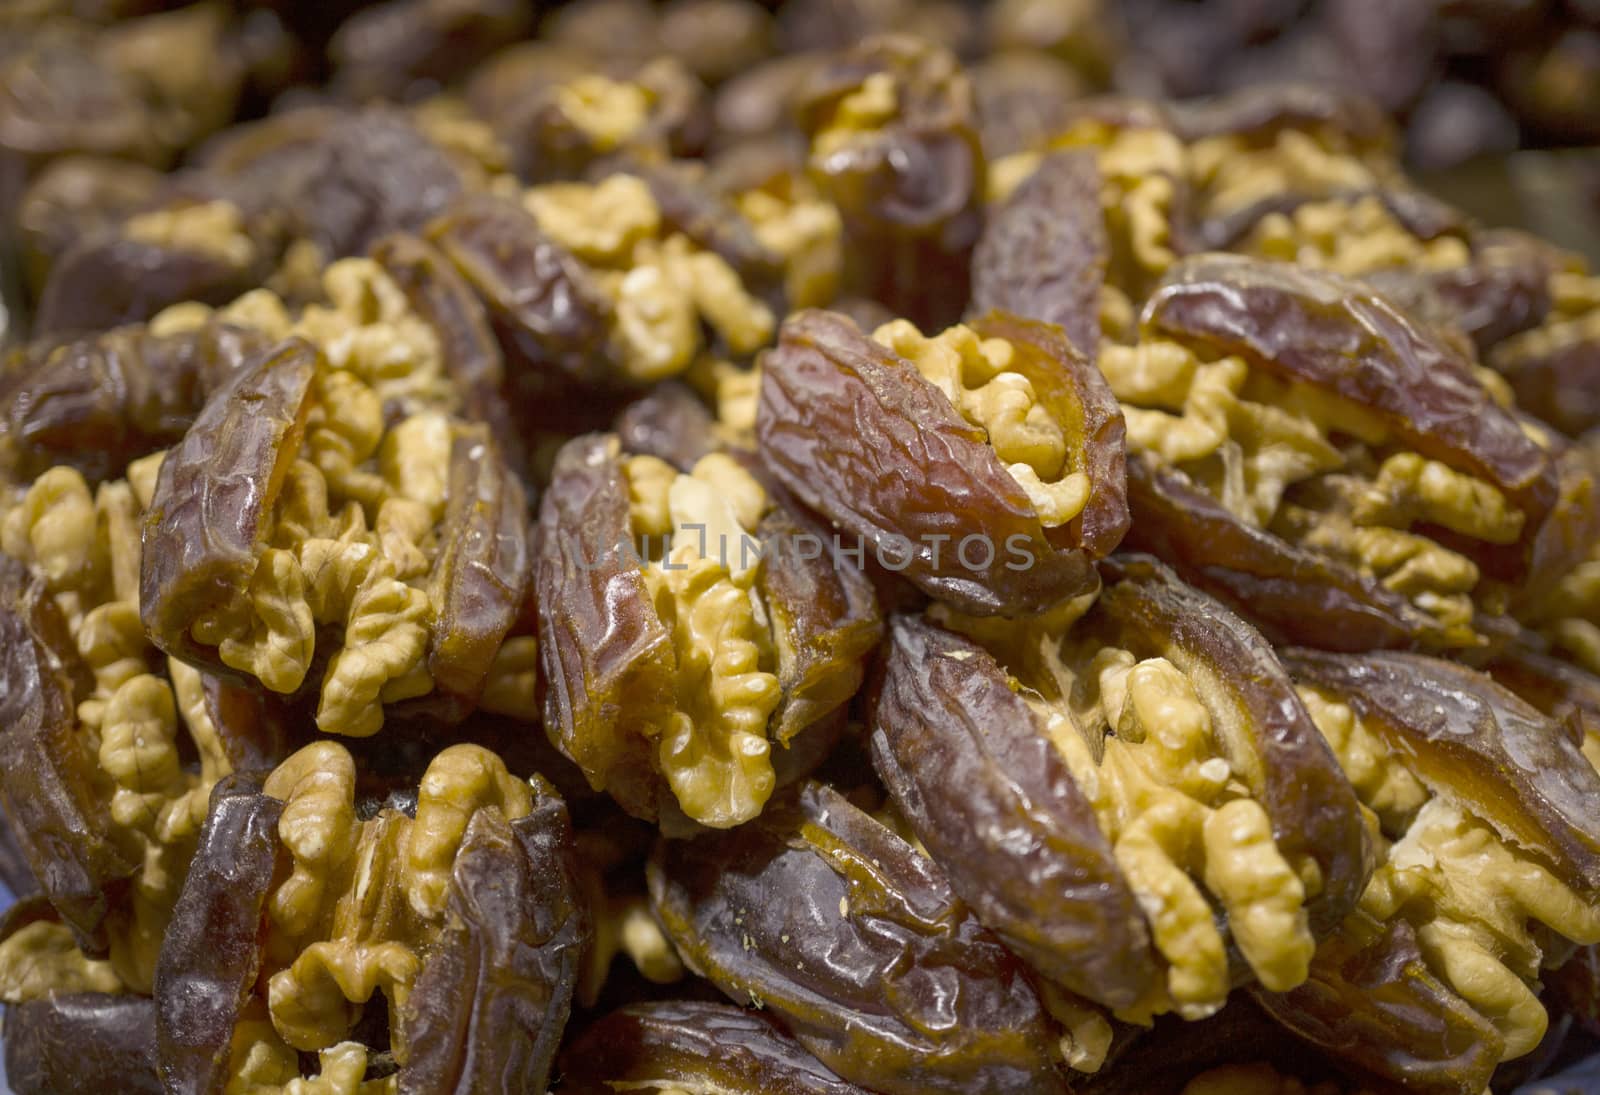 Dates stuffed with walnuts by photosil